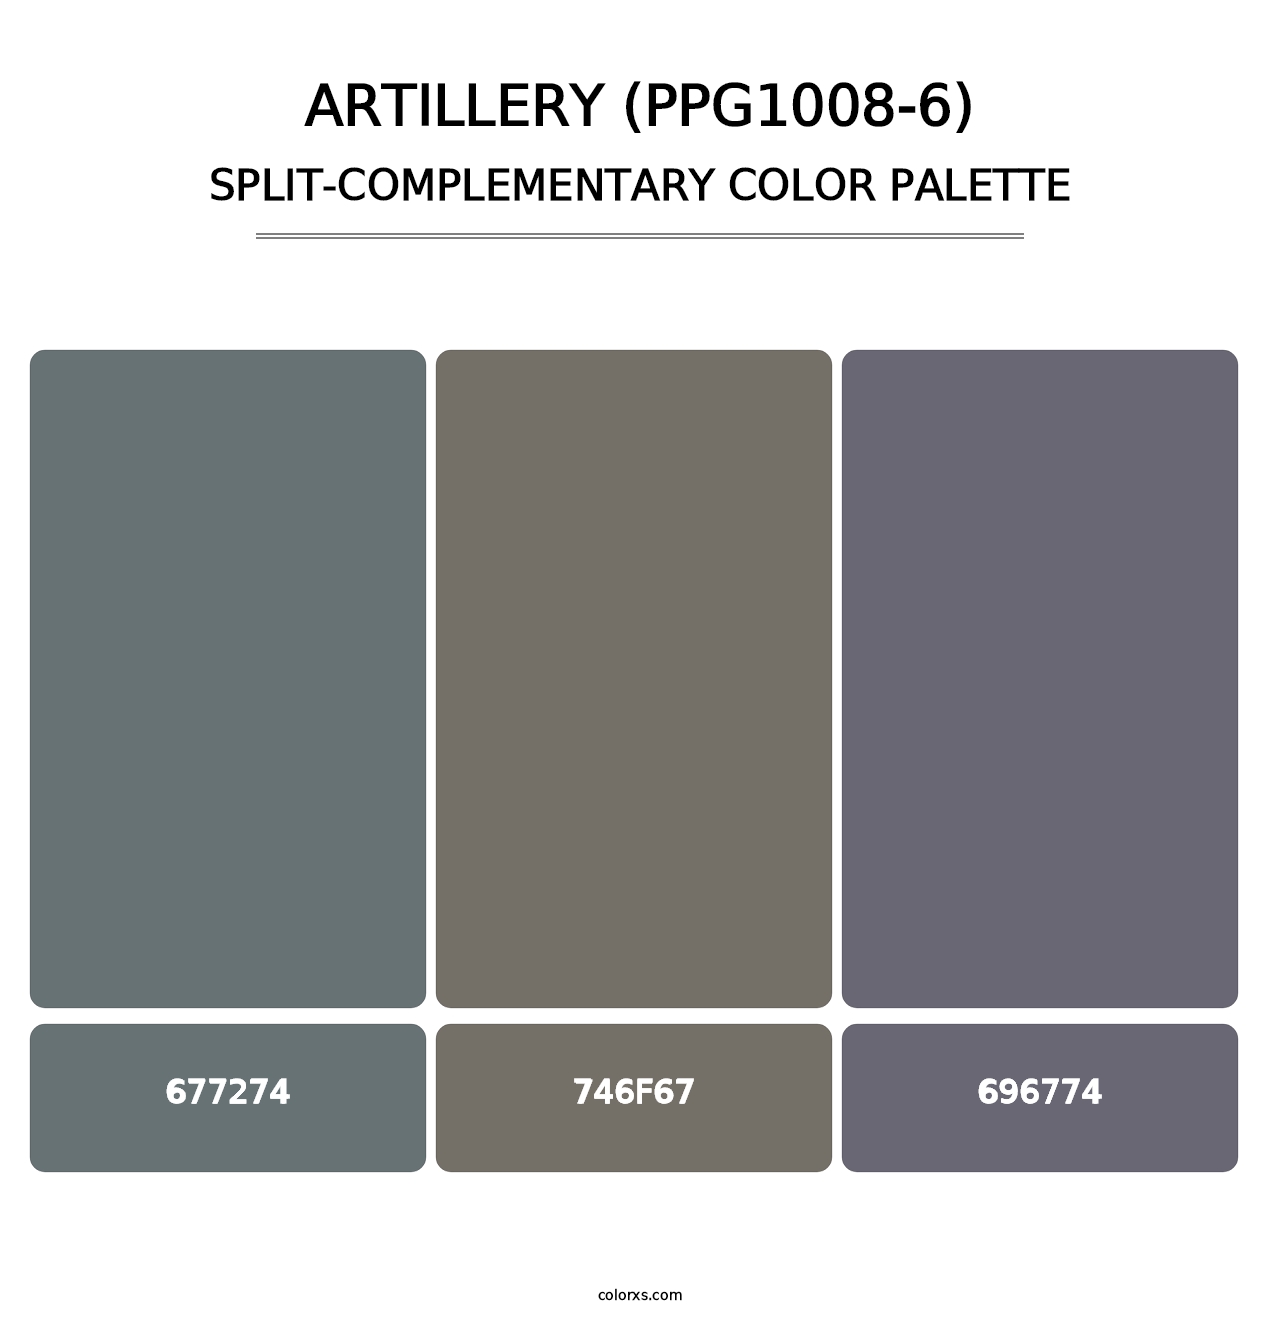 Artillery (PPG1008-6) - Split-Complementary Color Palette